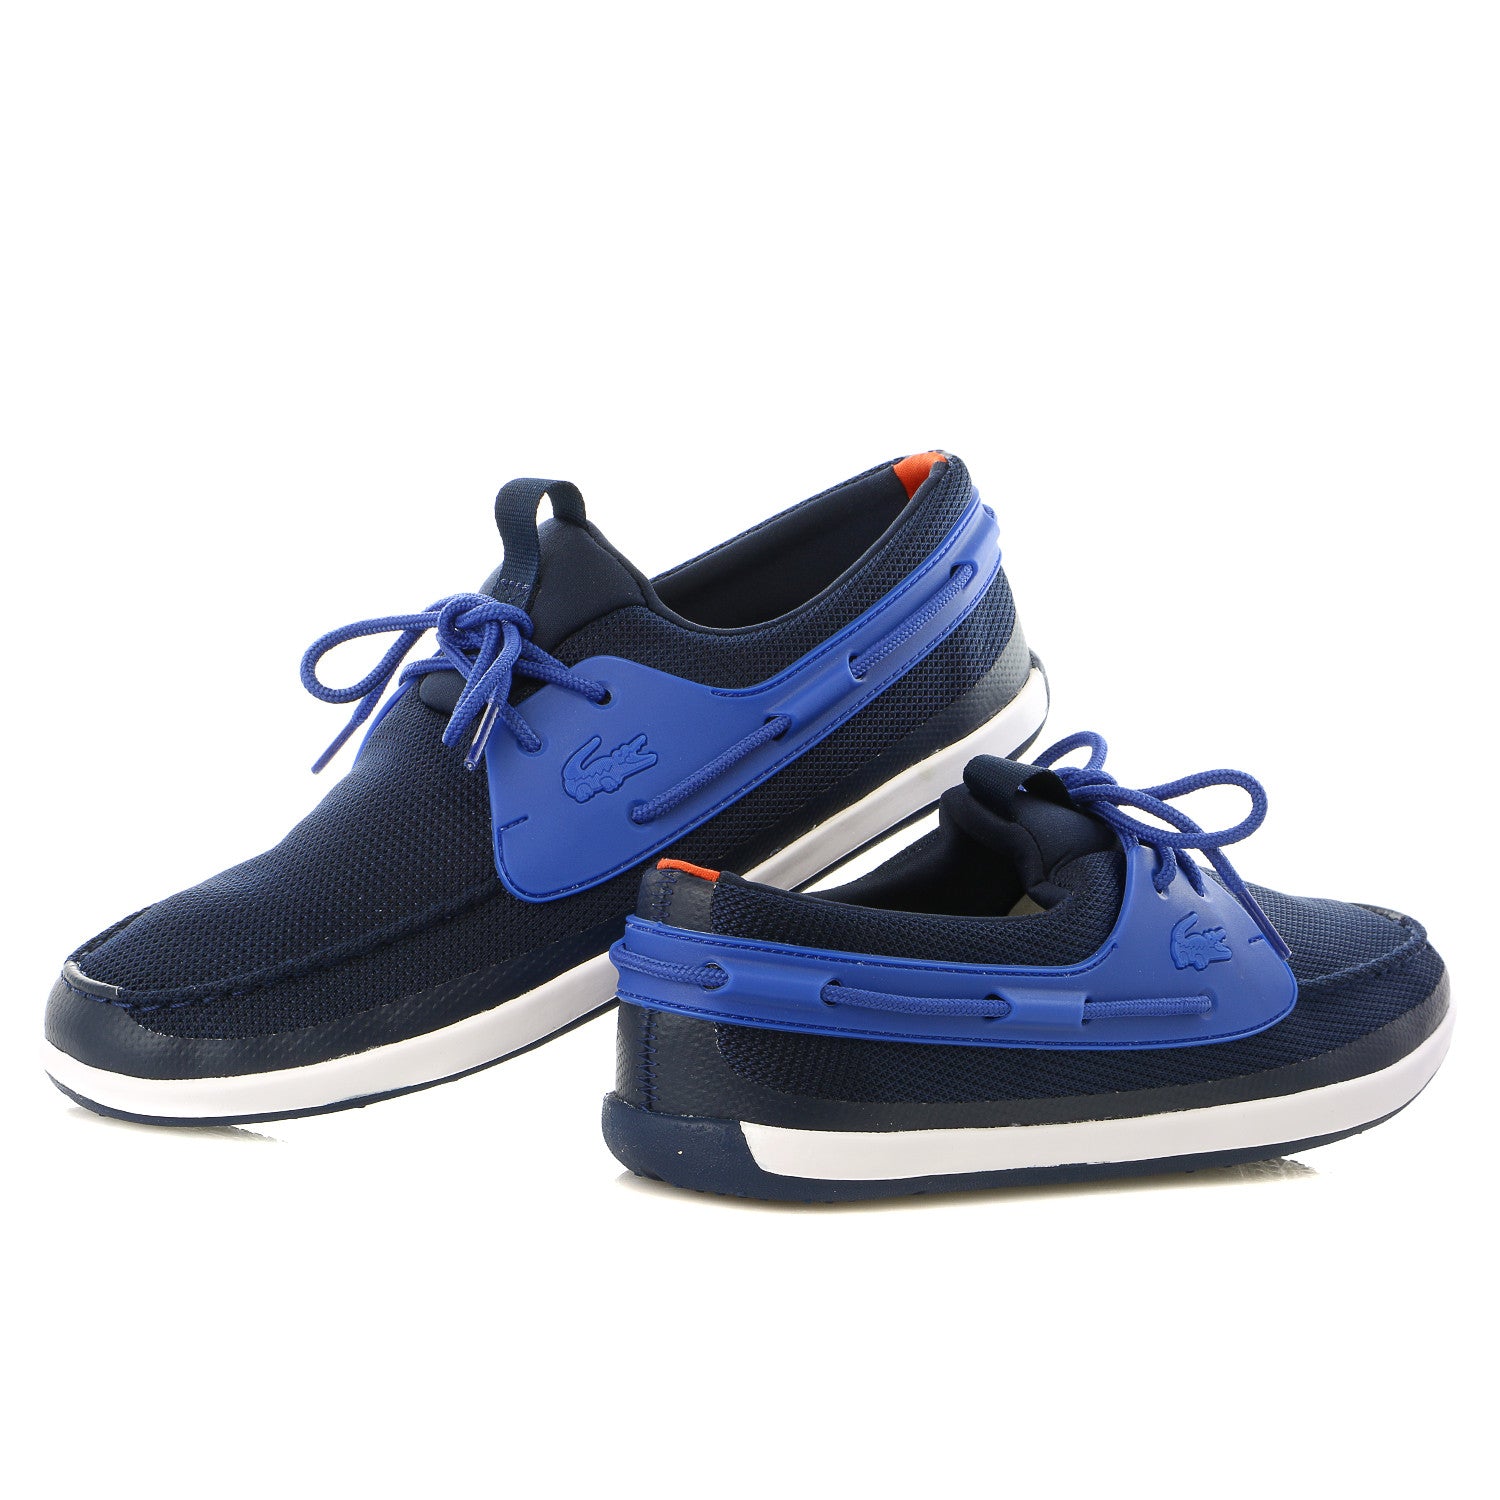 Lacoste L.Andsailing 116 Fashion Sneaker Boat Shoe - Mens - Shoplifestyle